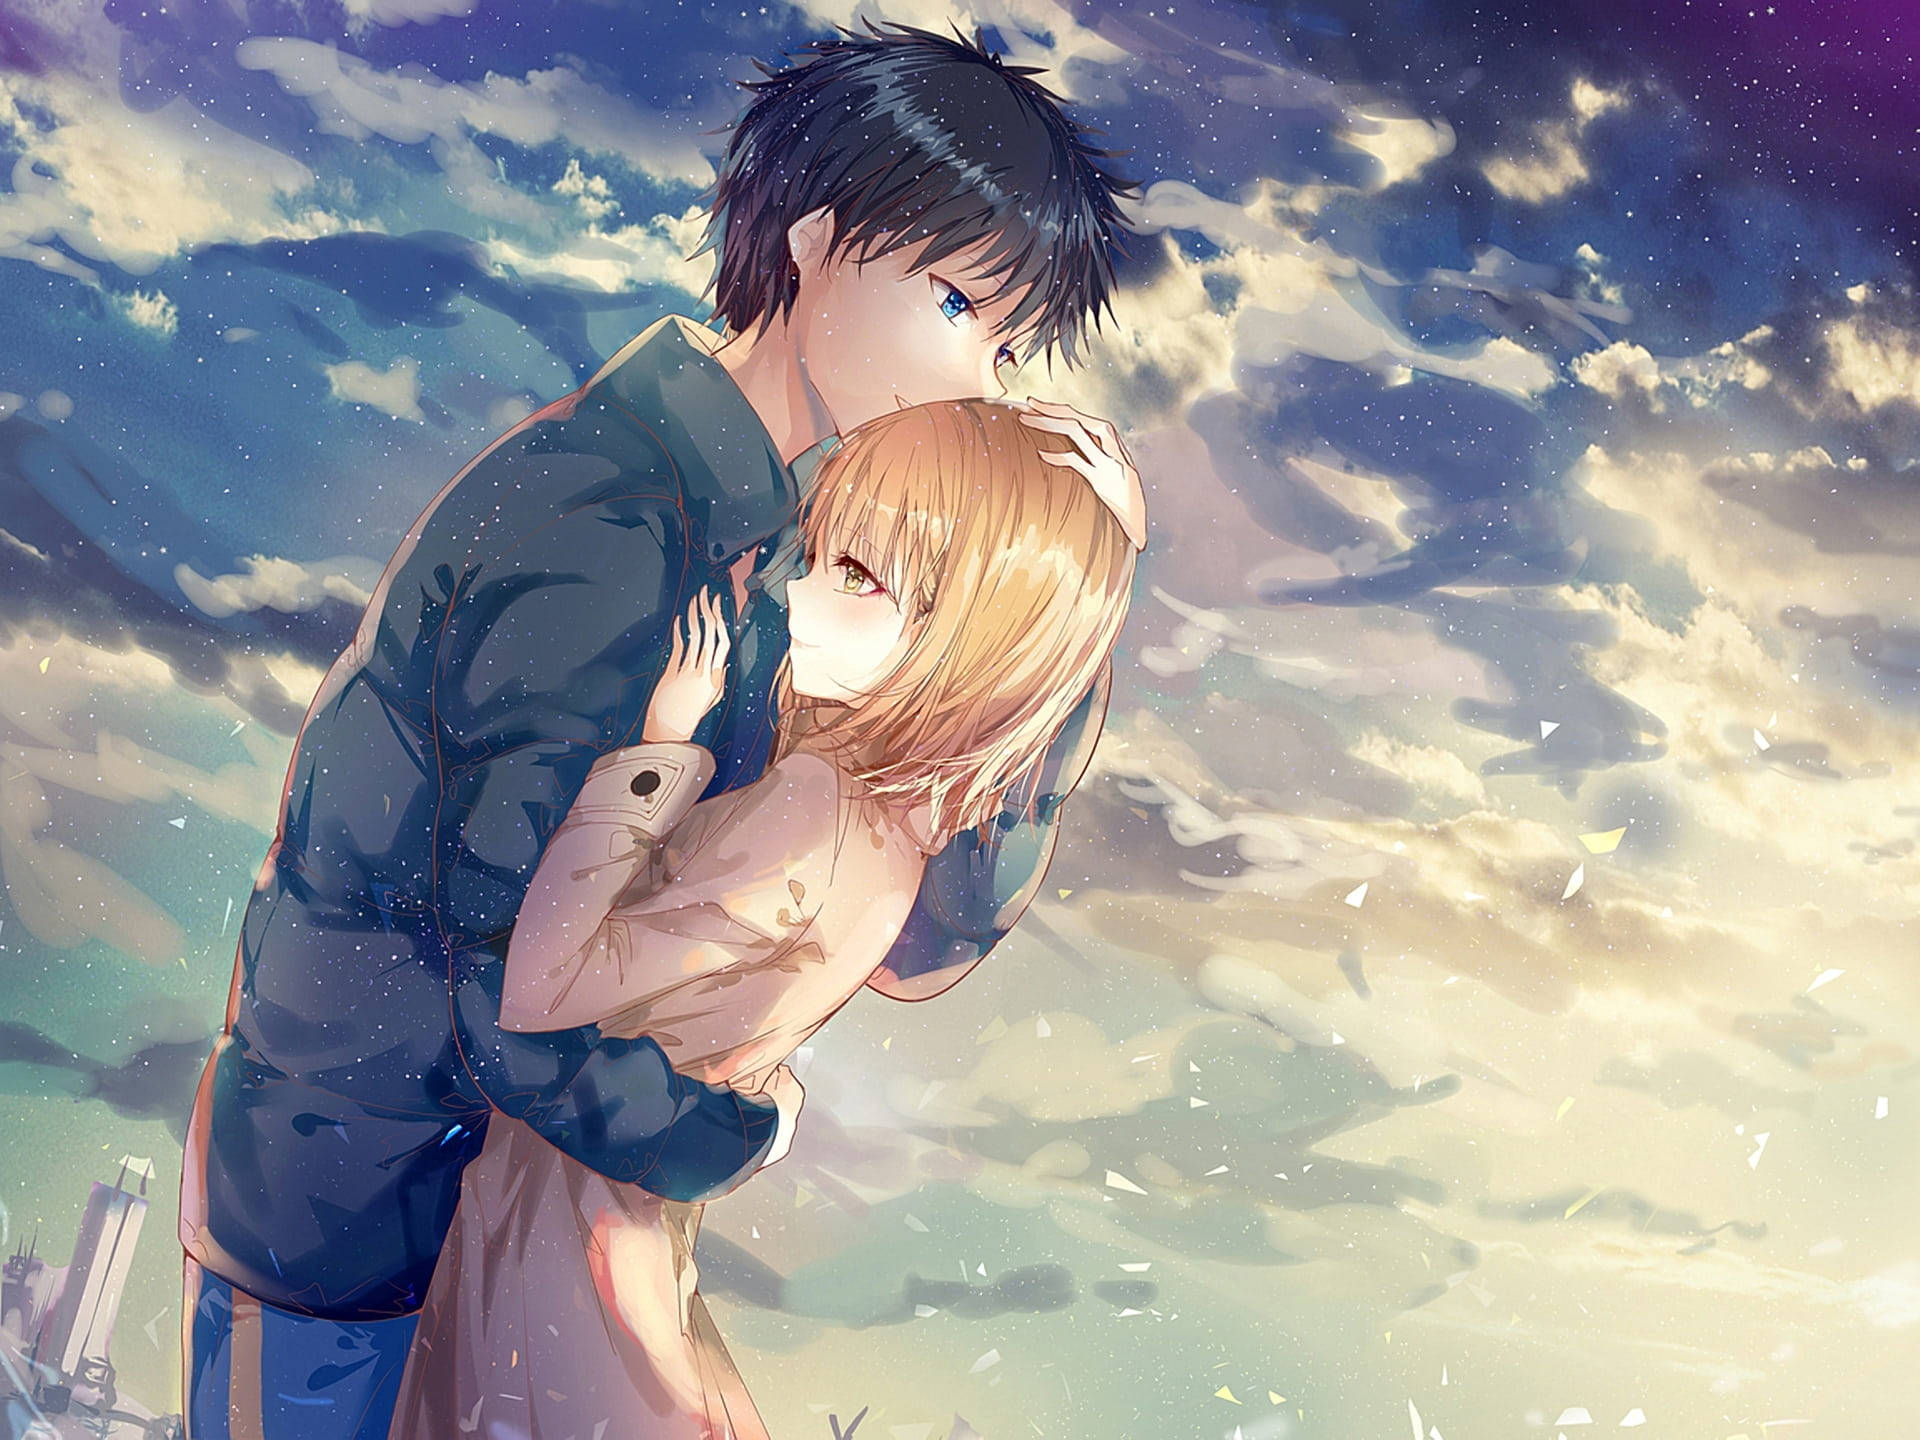 Cute anime couple kiss